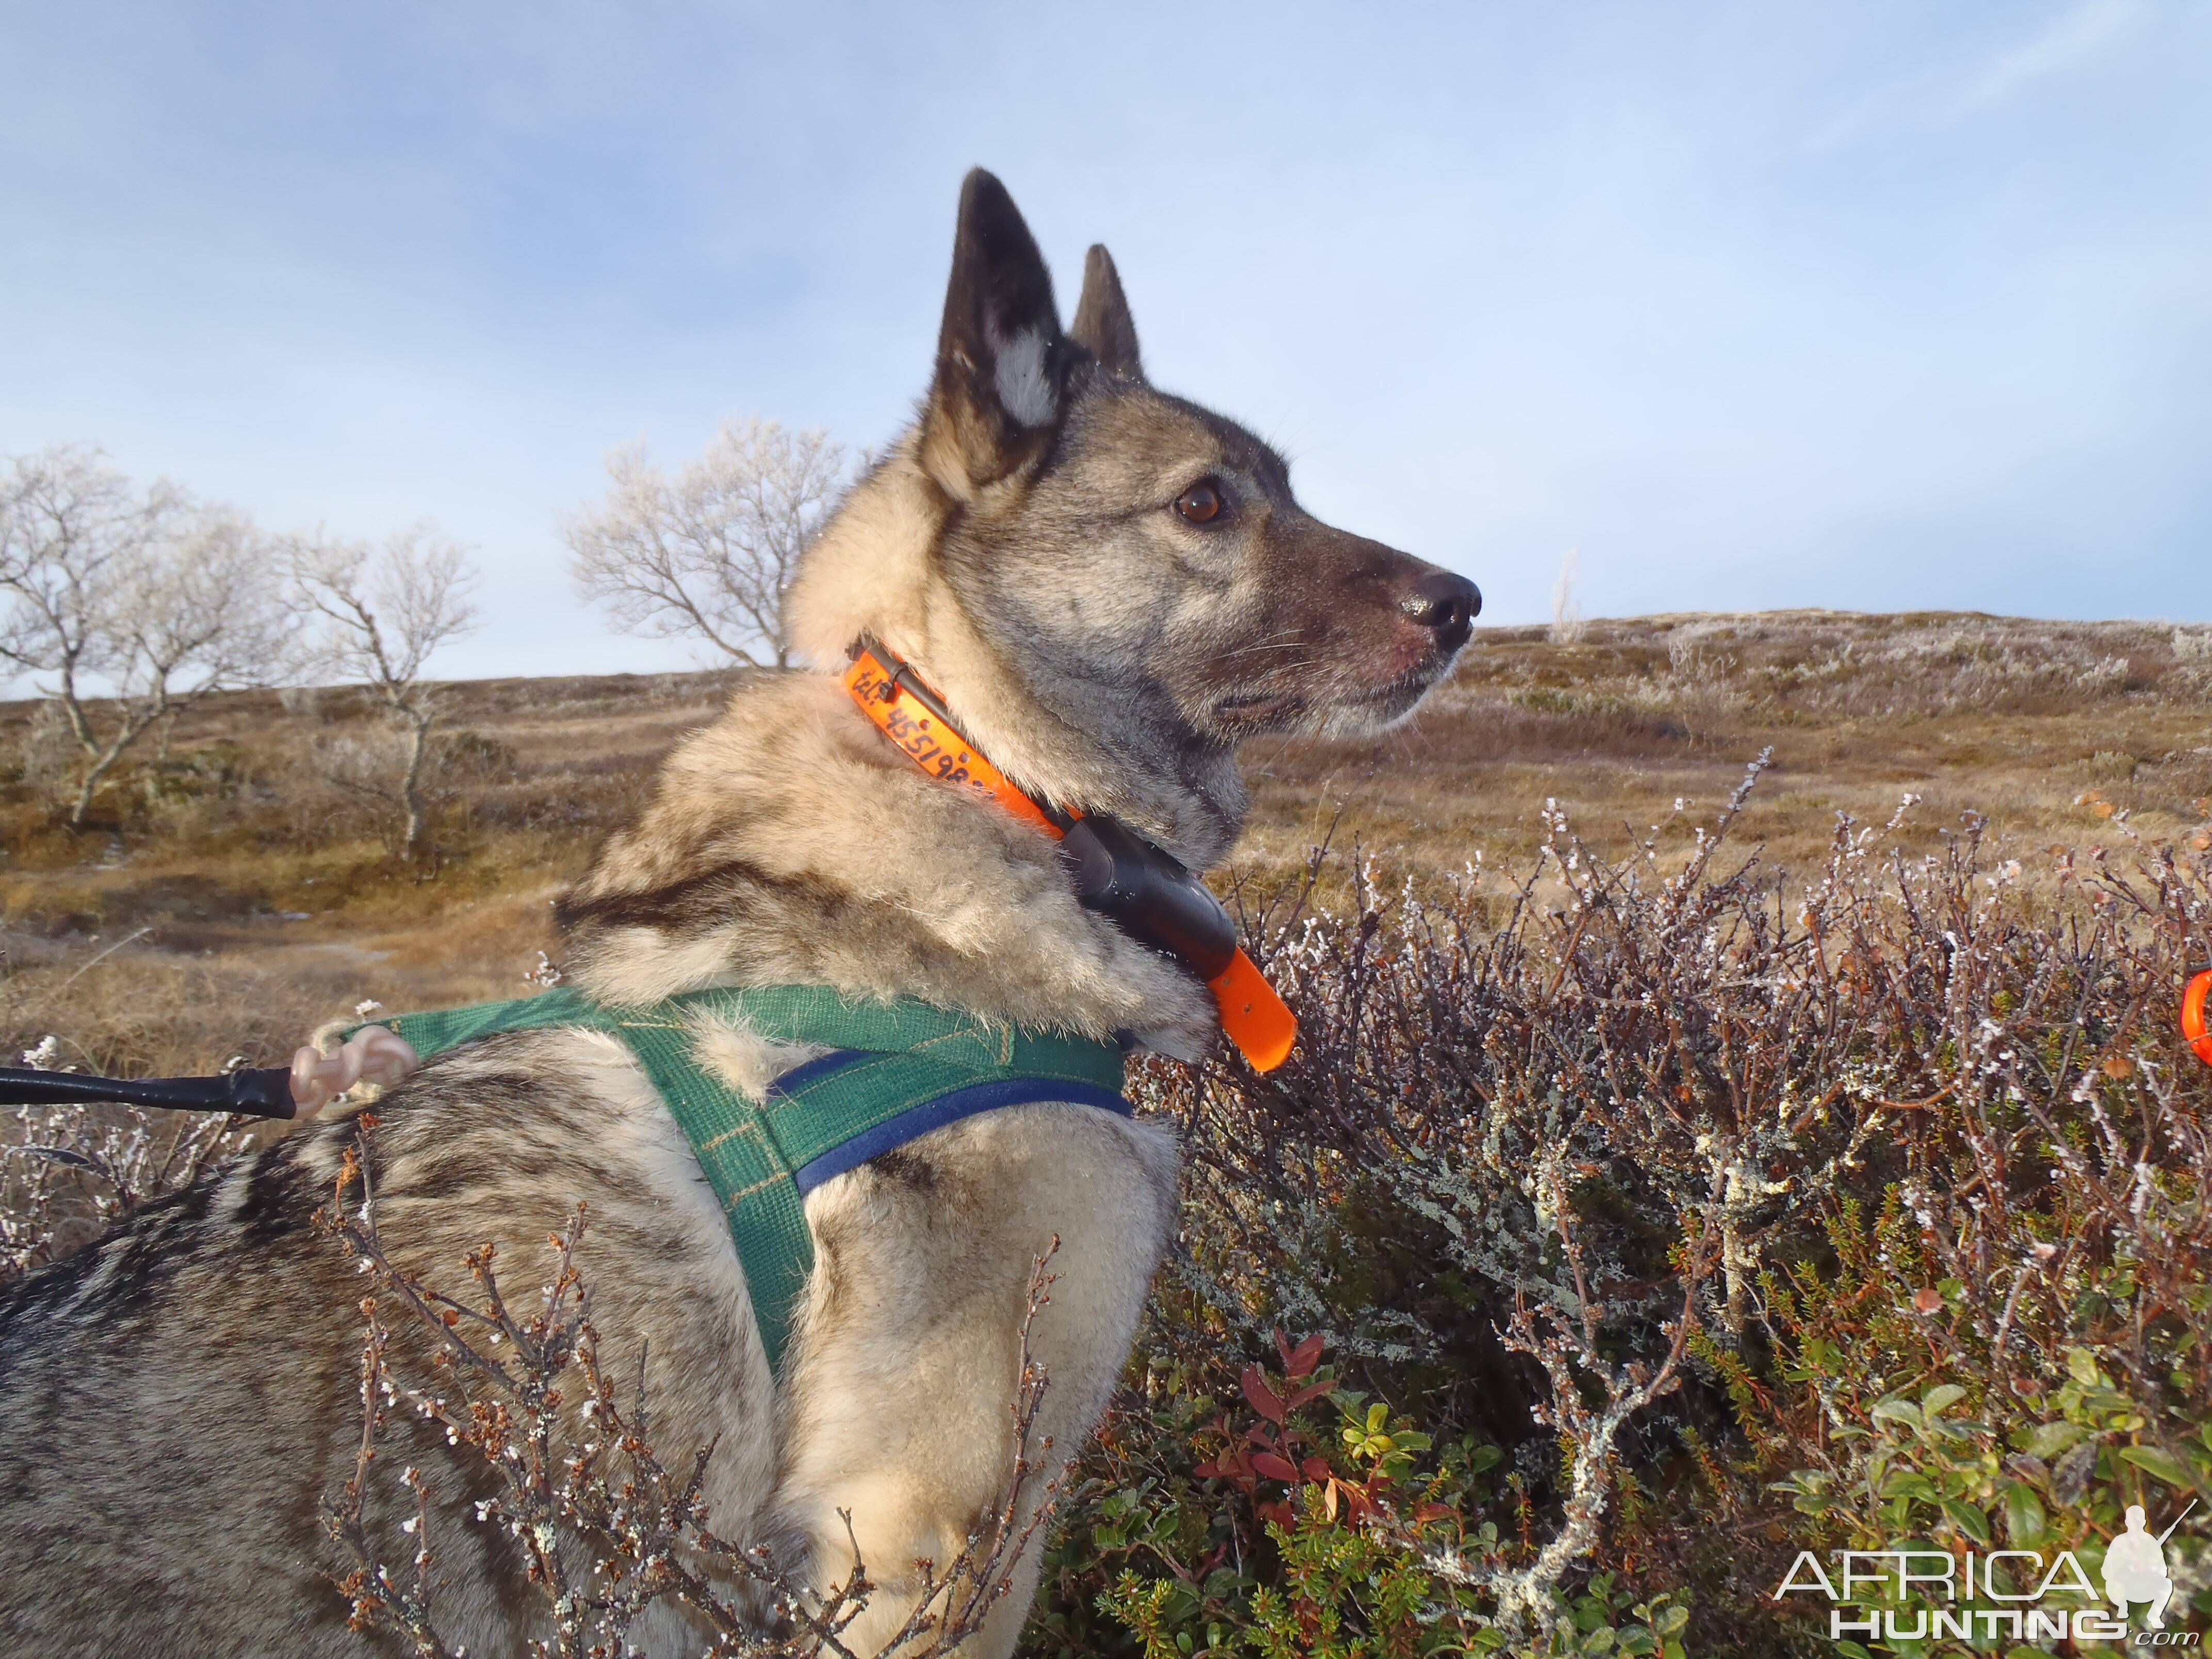 My Norwegian moose dog Cita